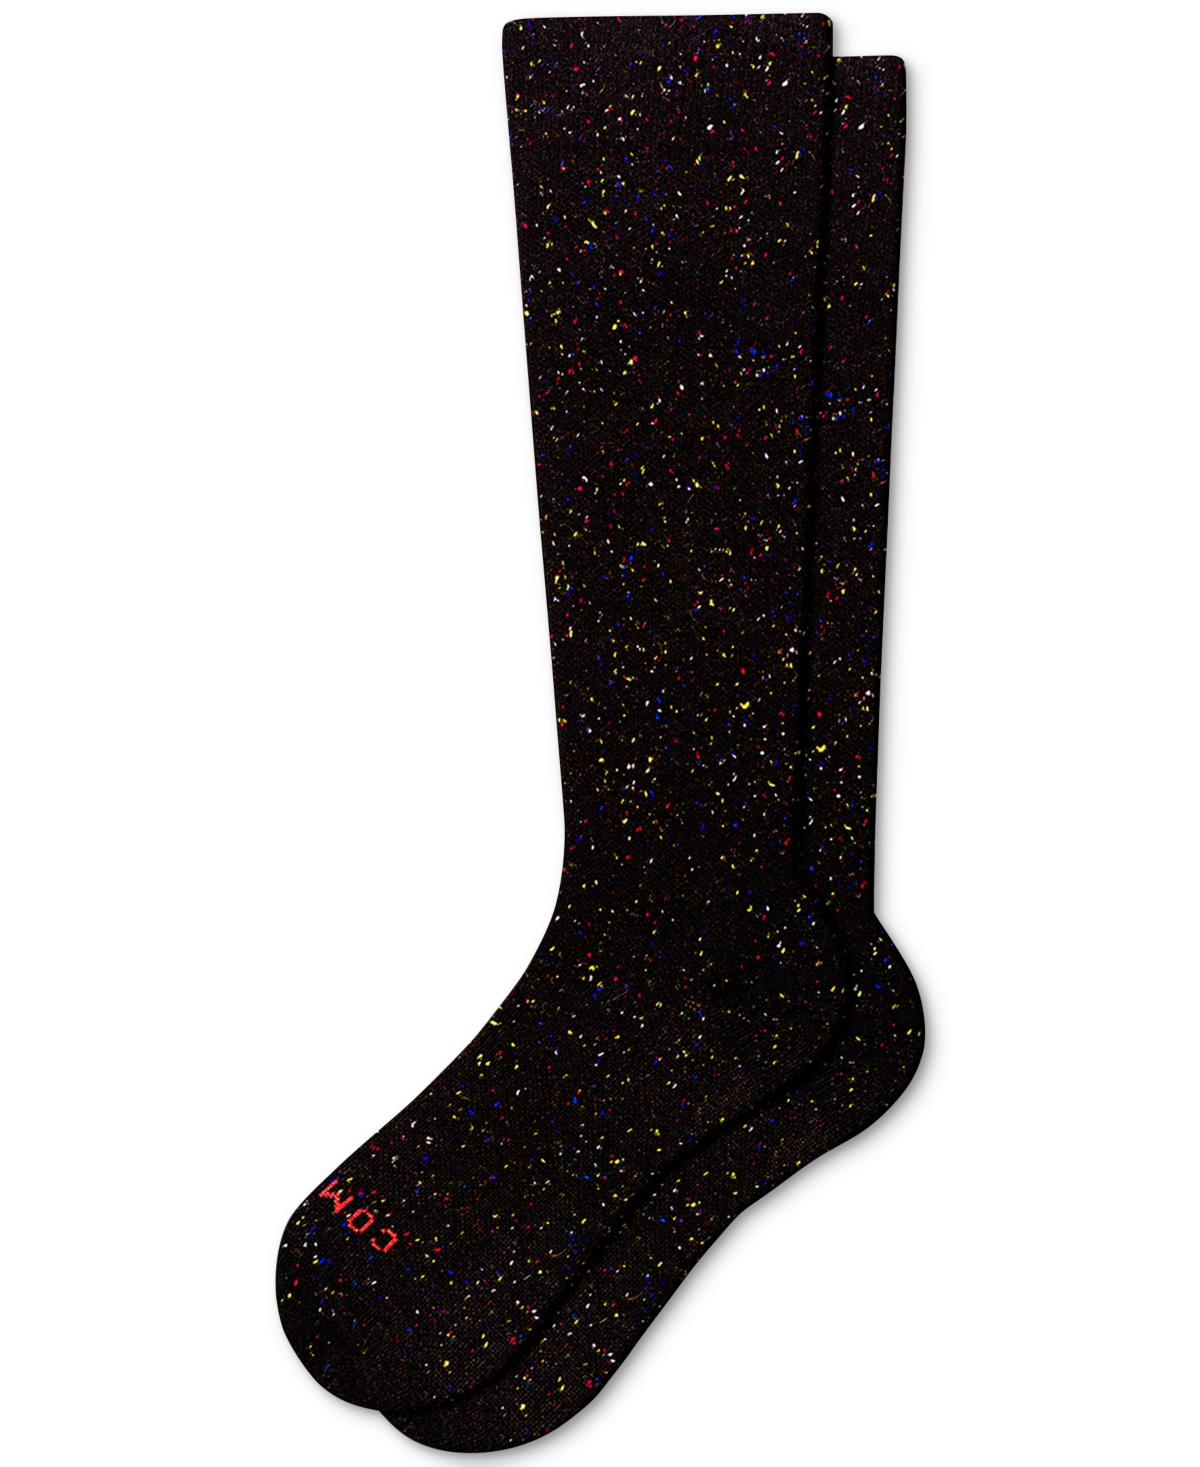 Knee-High Cotton Companion Compression Socks - Galaxy